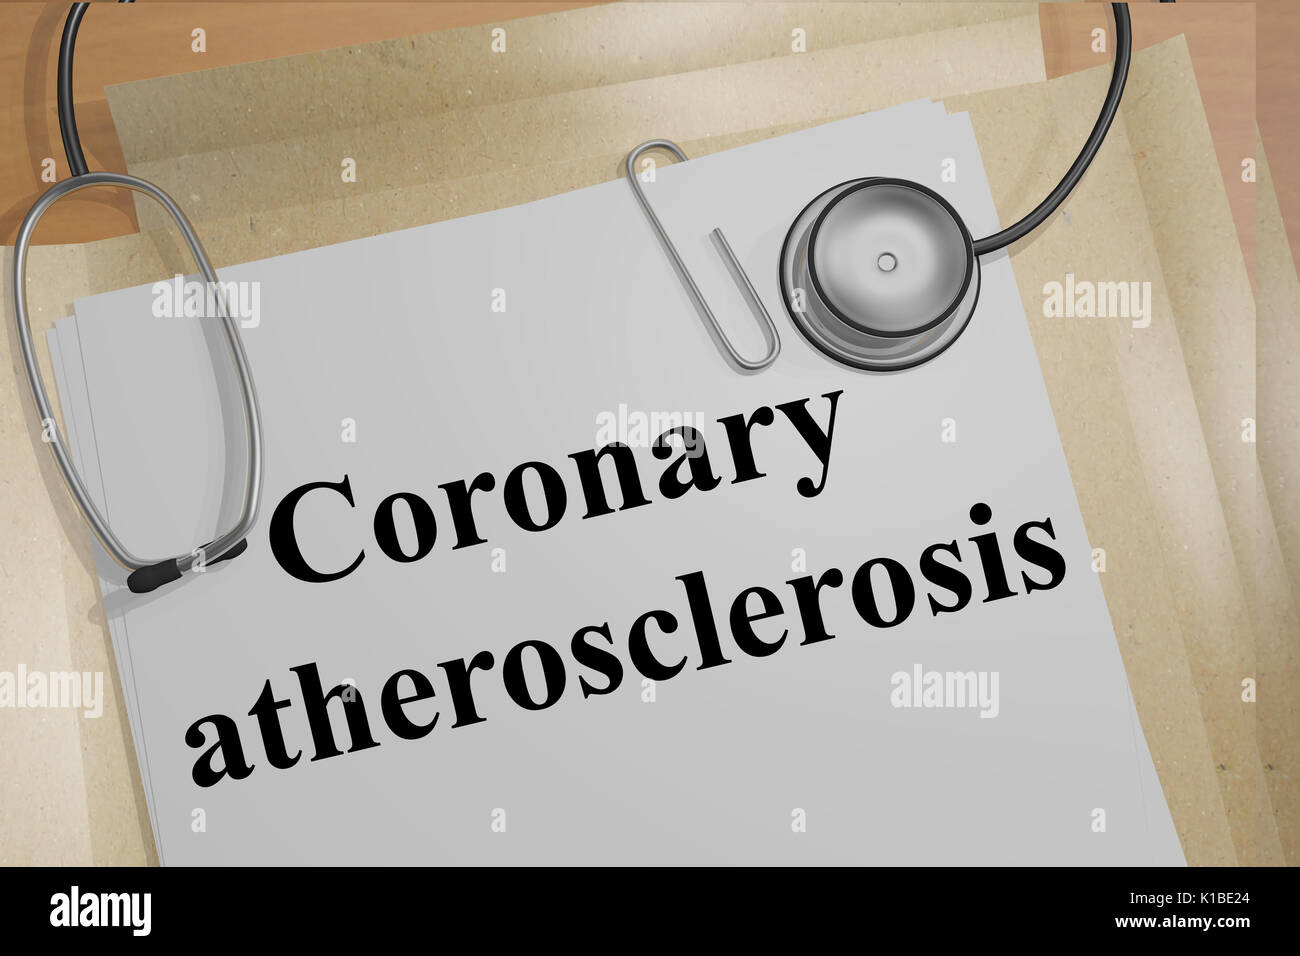 Render illustration of Coronary atherosclerosis title on Medical Documents Stock Photo